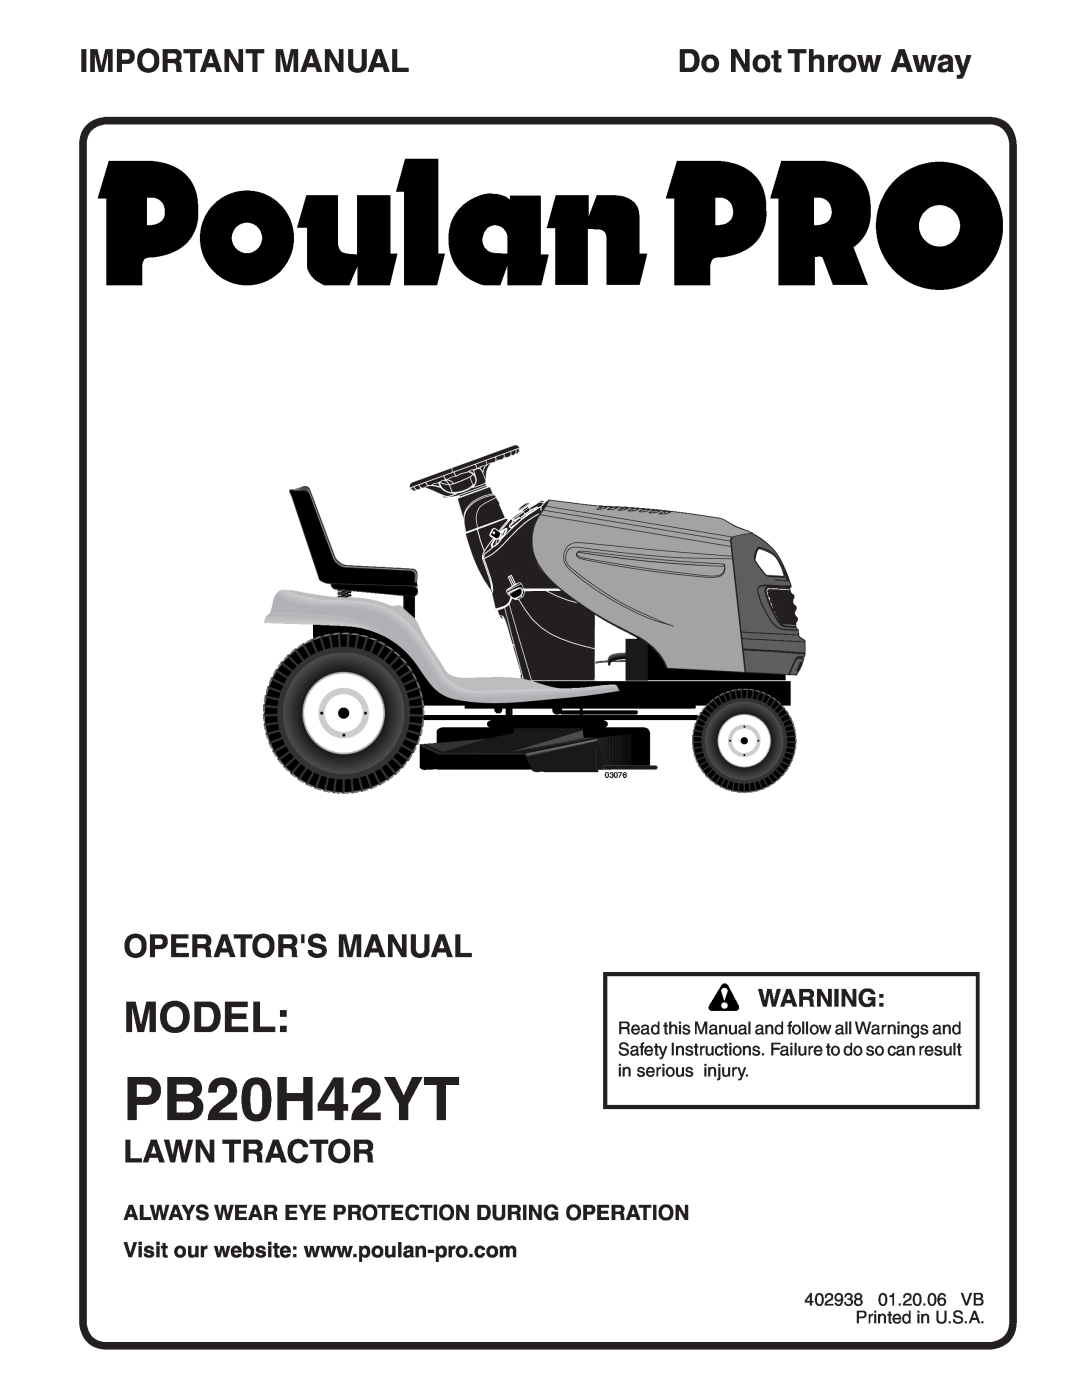 Poulan PB20H42YT manual Model, Important Manual, Operators Manual, Lawn Tractor, Do Not Throw Away, 03076 